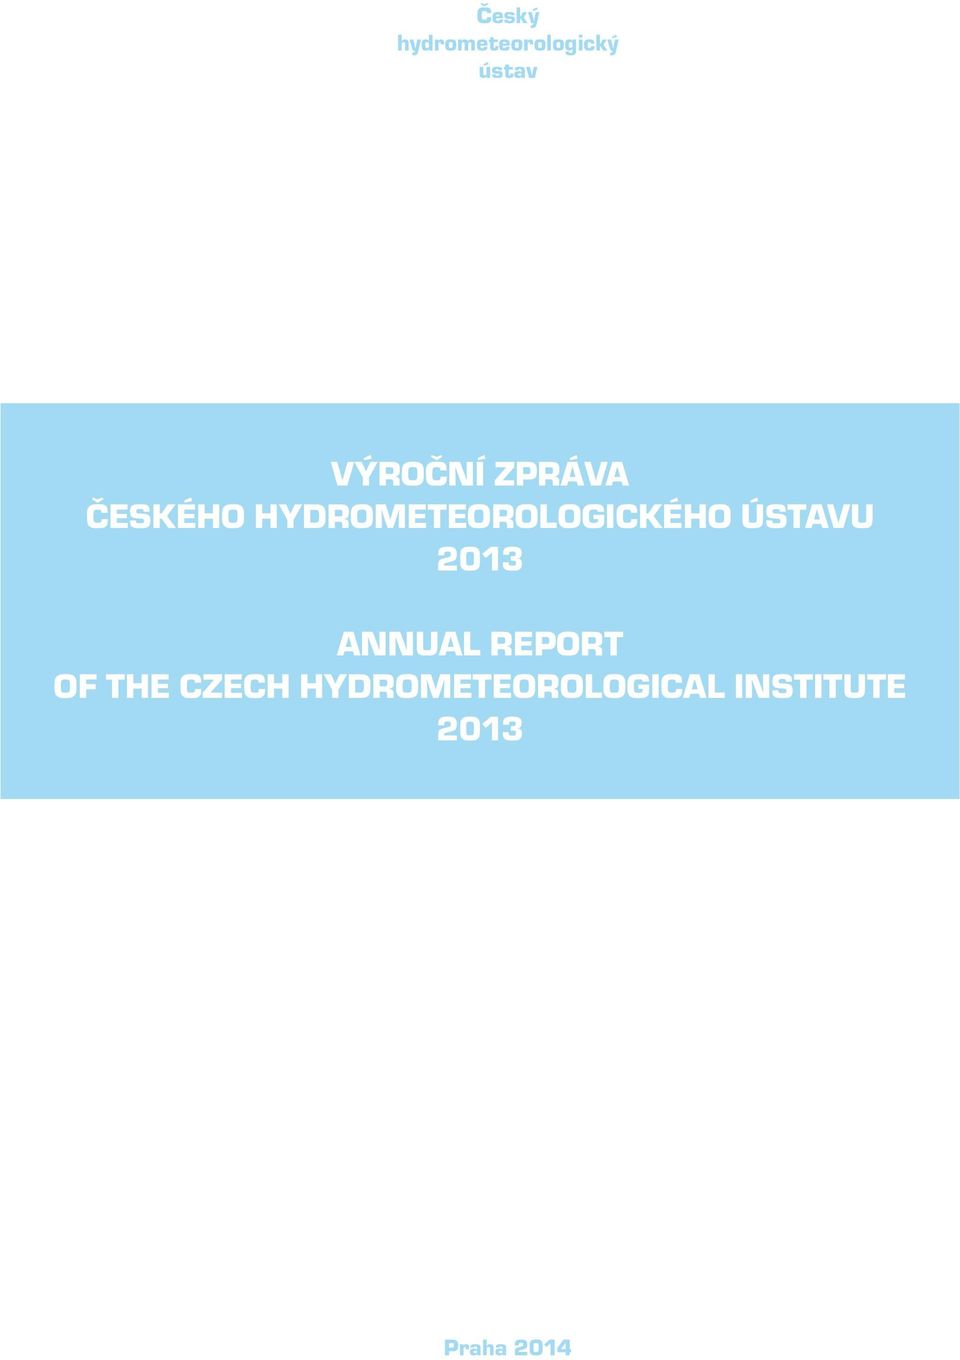 ÚSTAVU 2013 ANNUAL REPORT OF THE CZECH